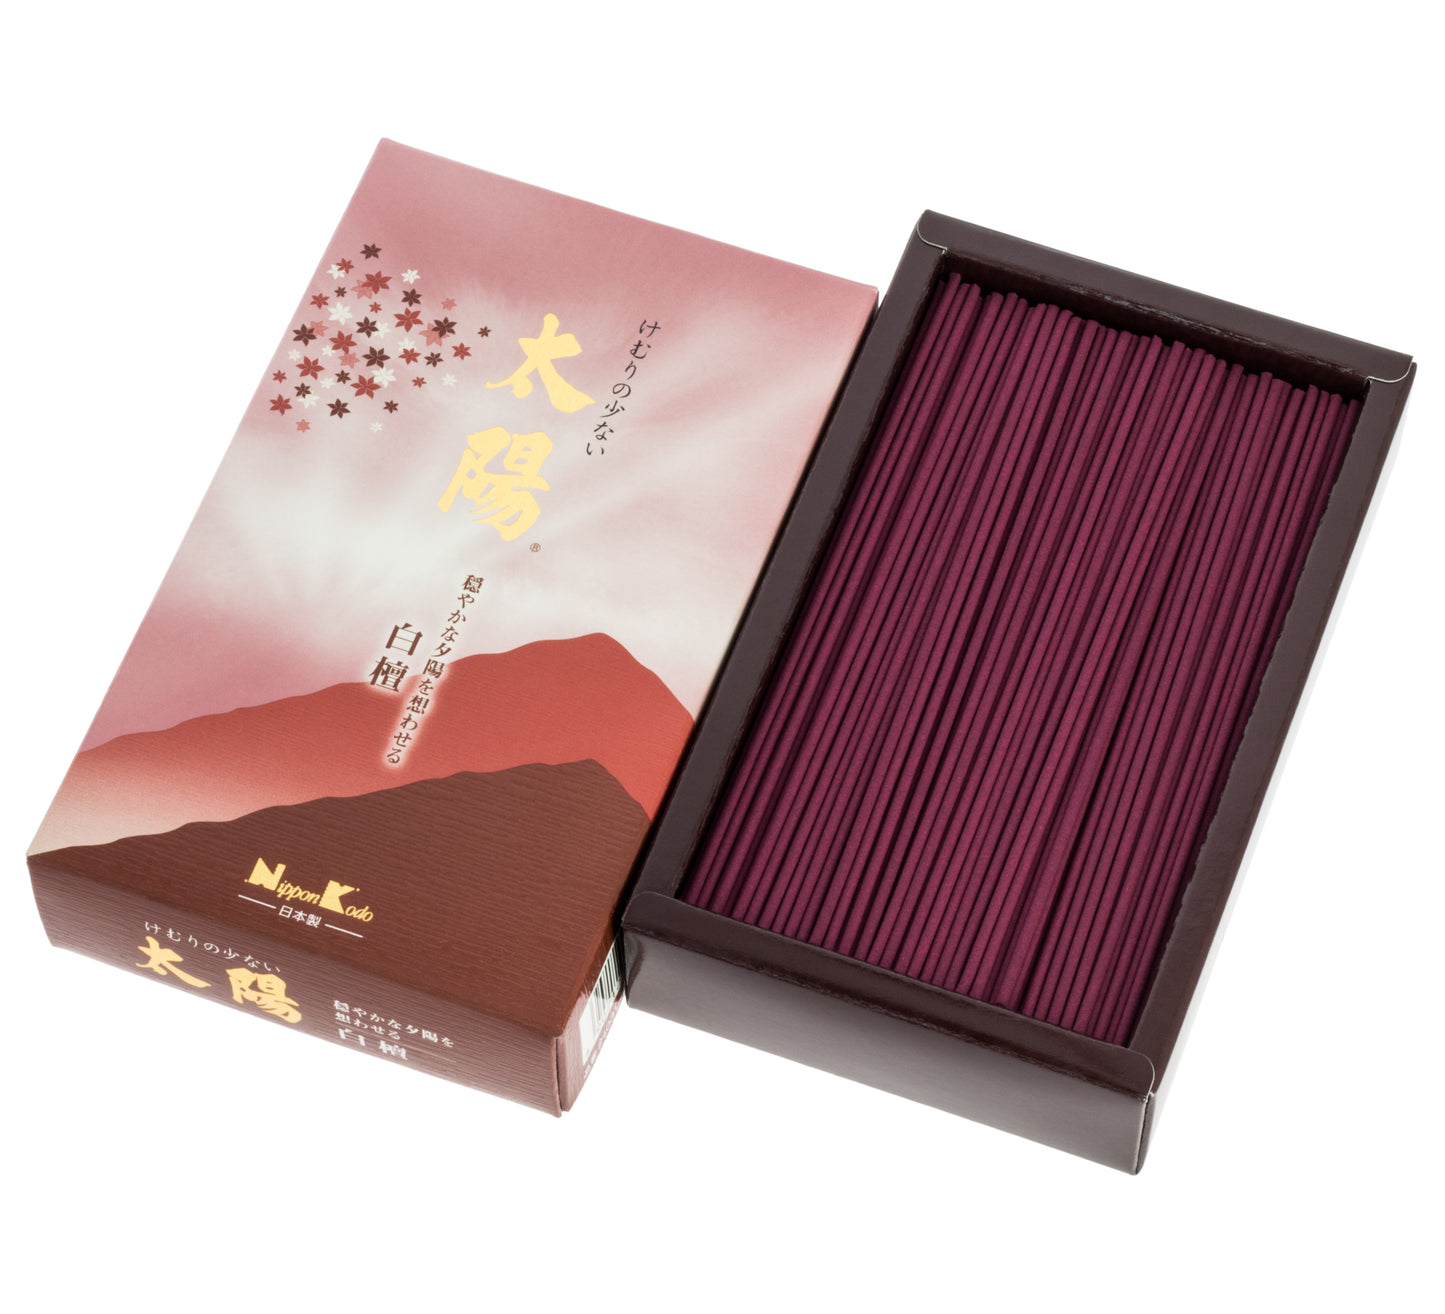 Taiyo Incense - Byakudan Sandalwood, Large Box